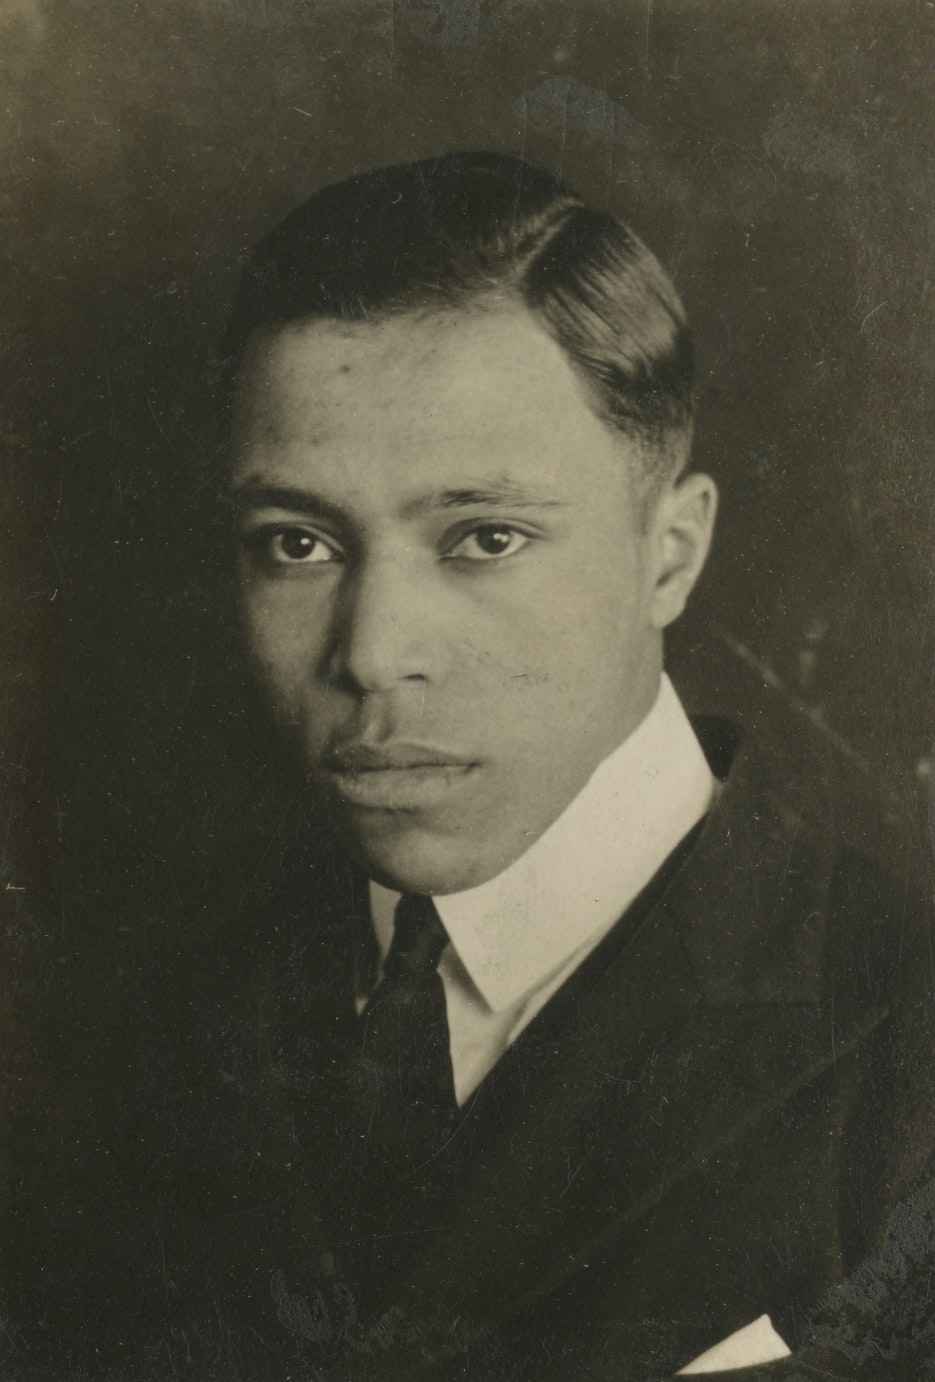 Sepia head shot of a young Edwin B. Jourdain, Jr., wearing suit and tie.